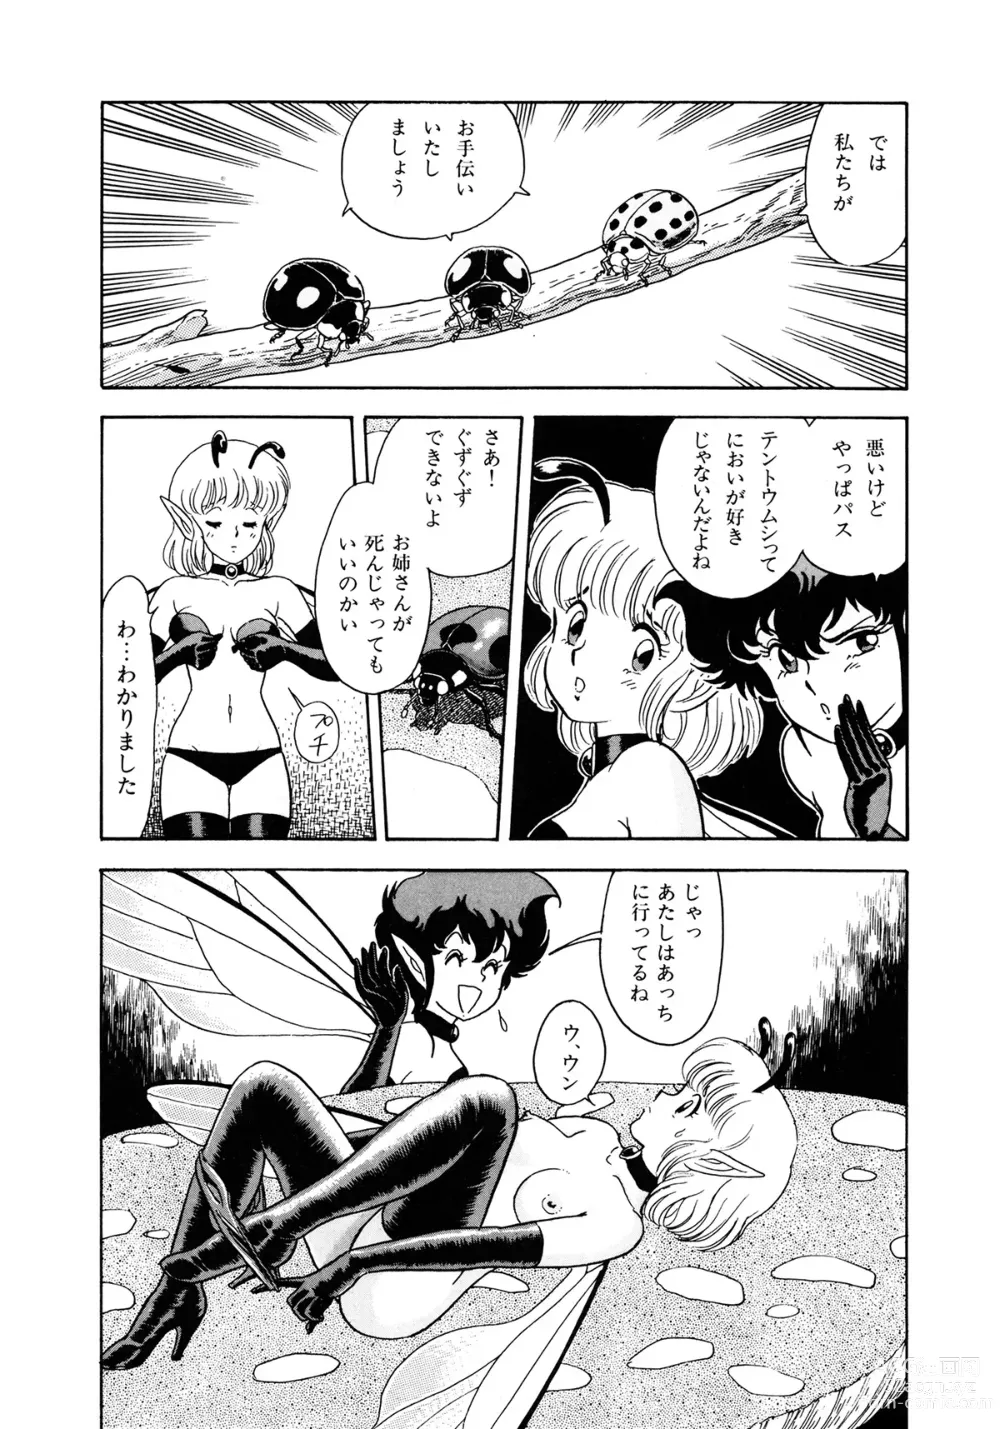 Page 13 of manga Insect Hunter